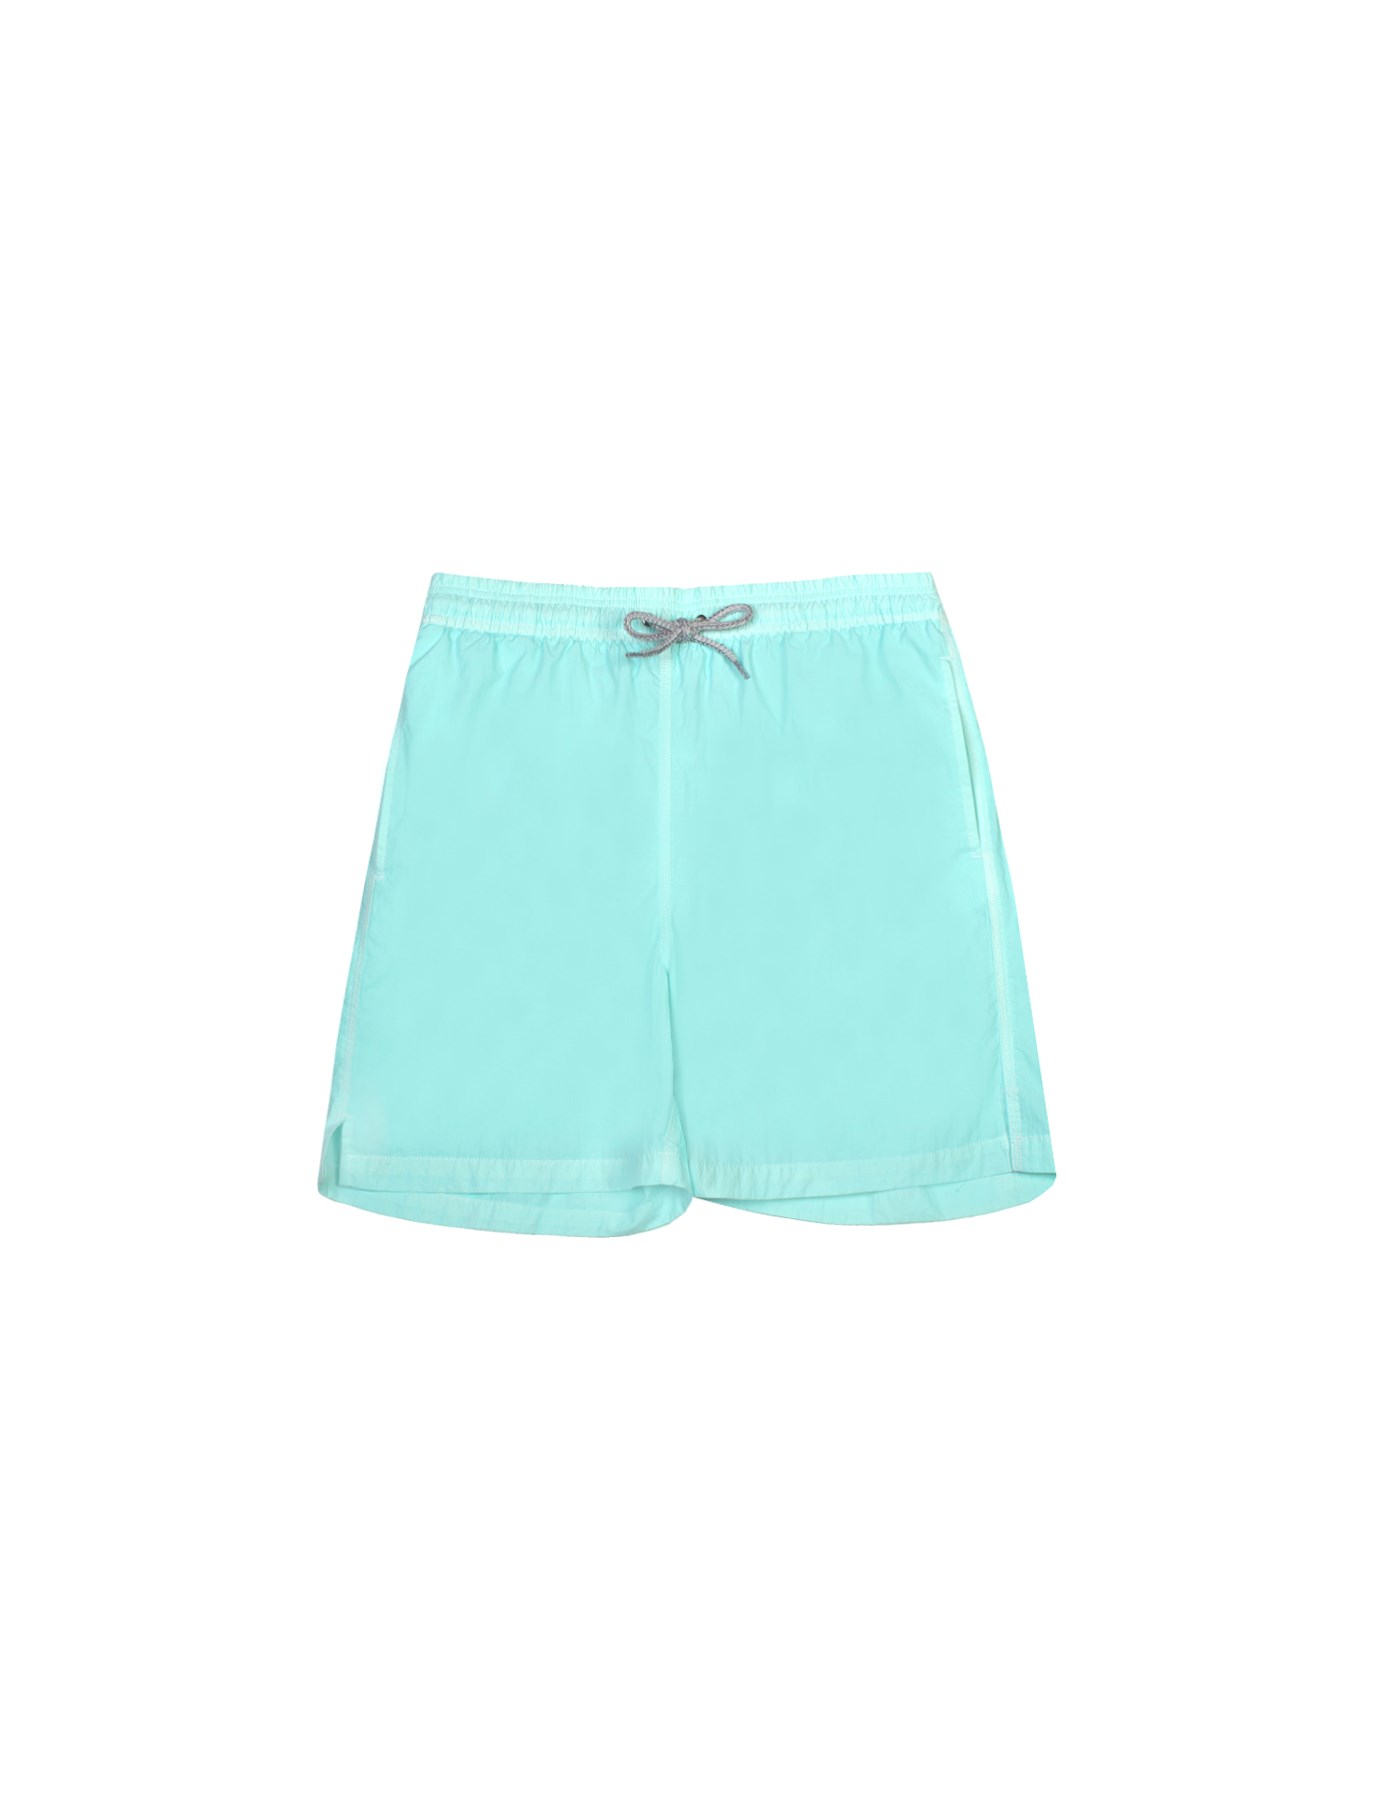 hawes & curtis men's aqua garment dye swim shorts